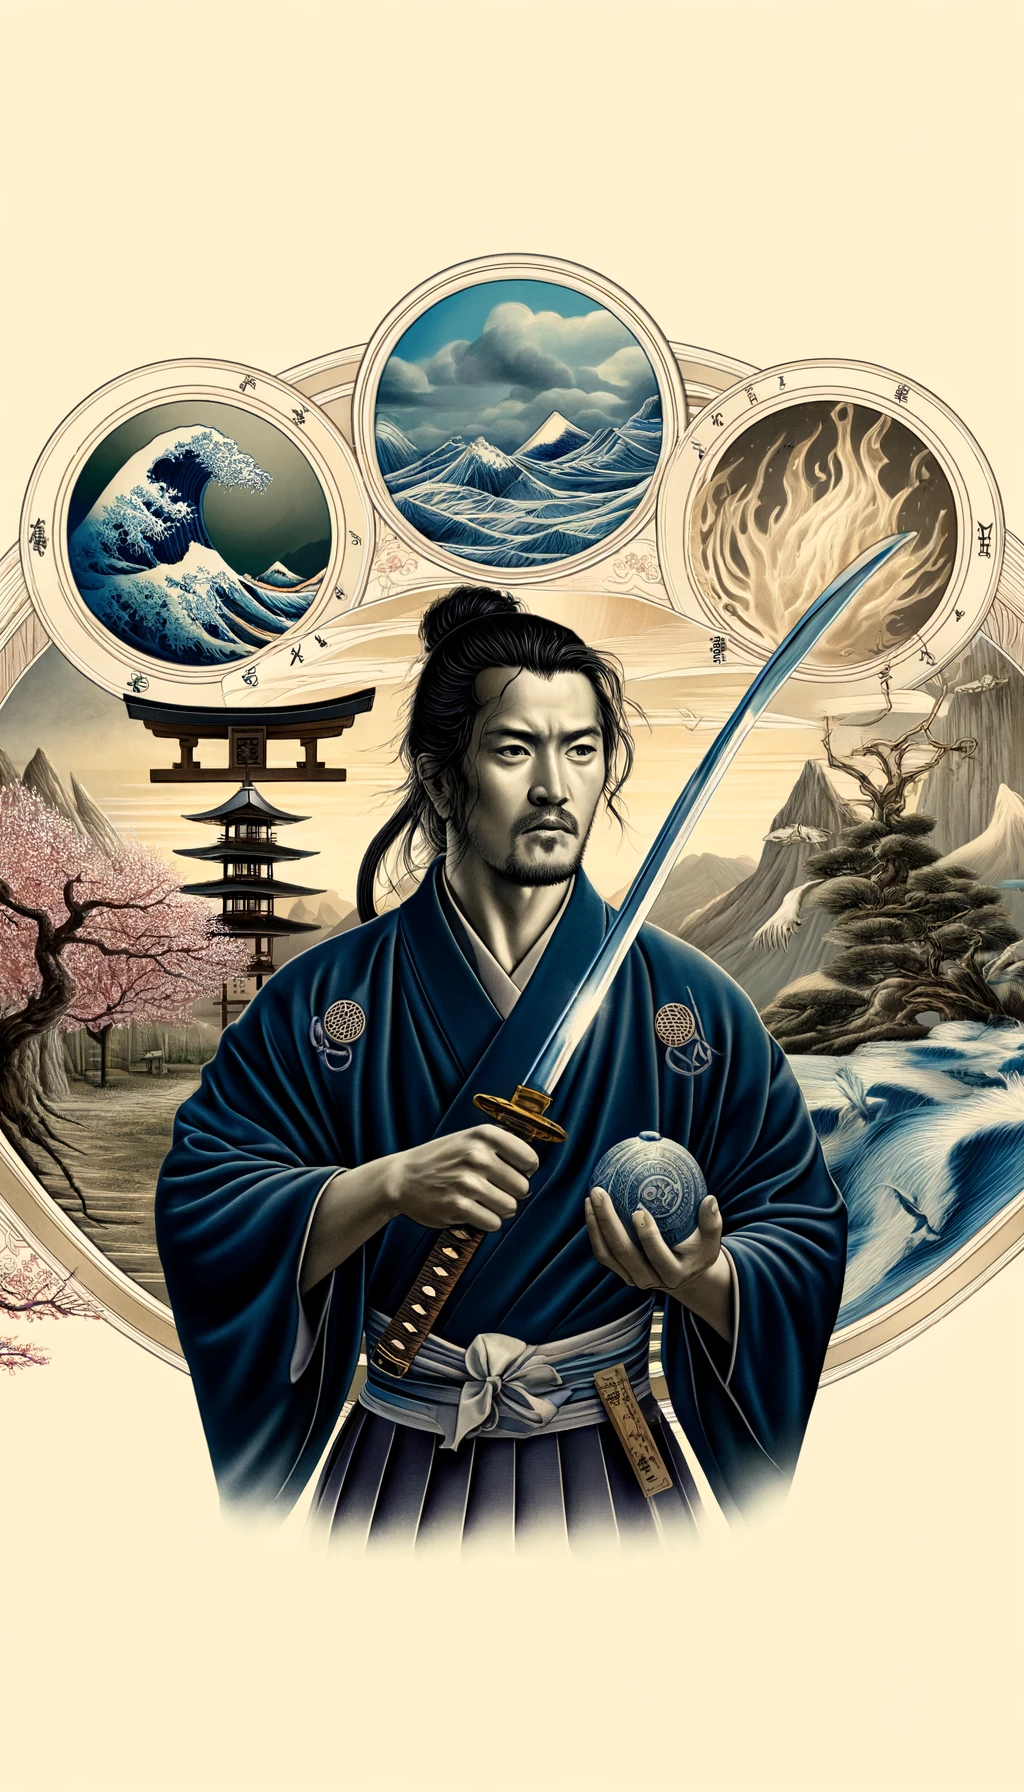 Miyamoto Musashi'nin "Beş Çember Kitabı